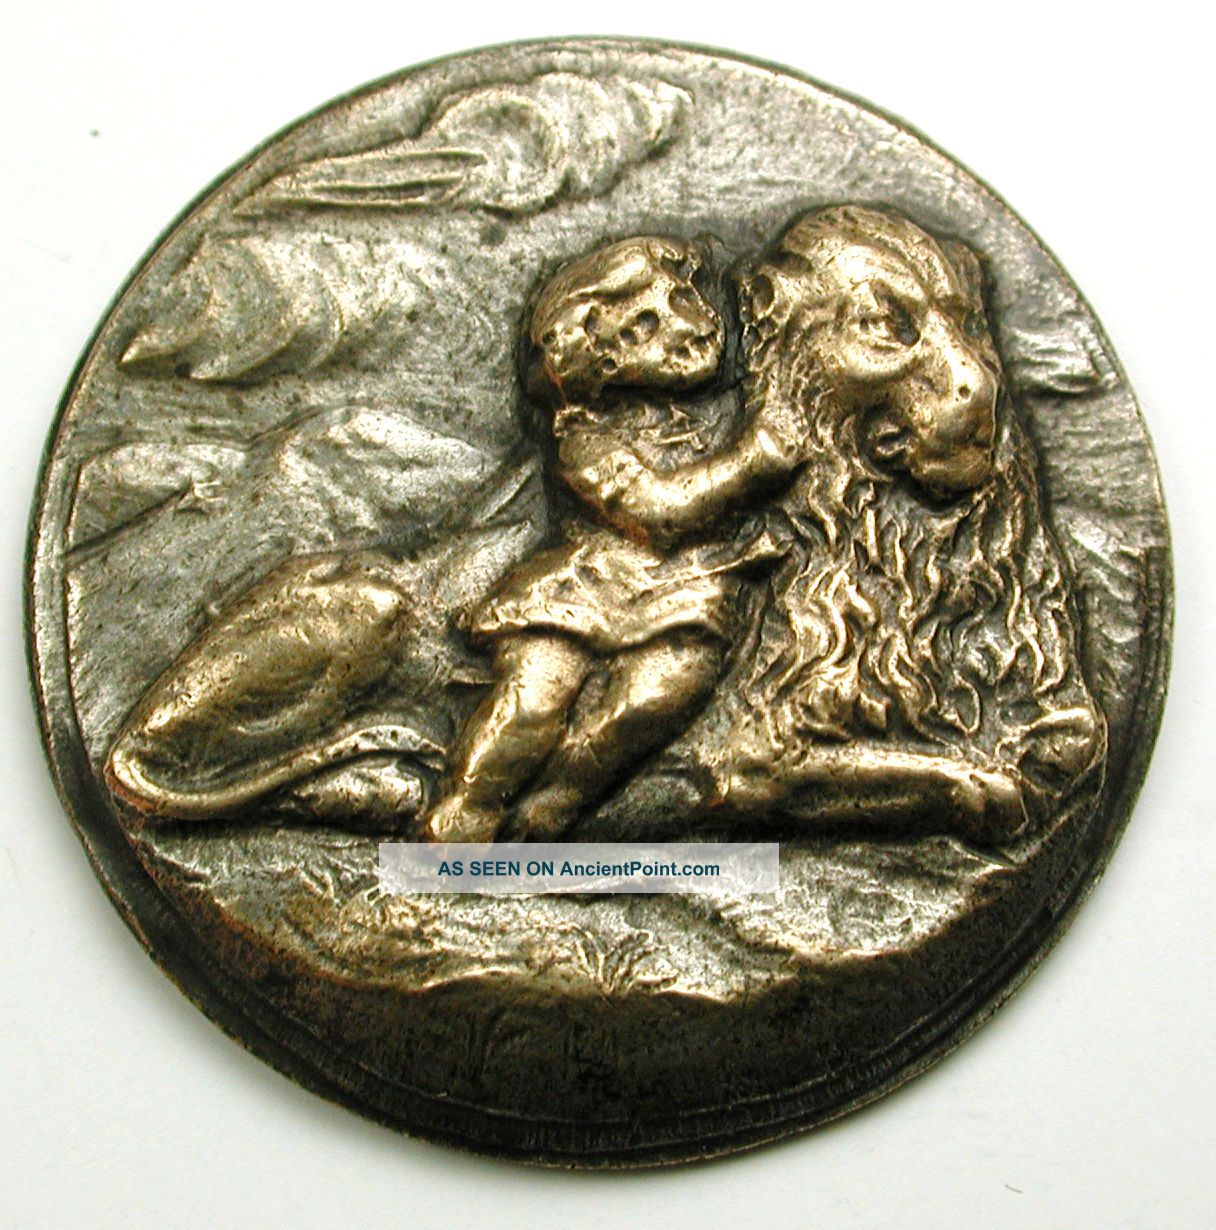 Antique Brass Button Girl Hugging A Lion Scene - 15/16 